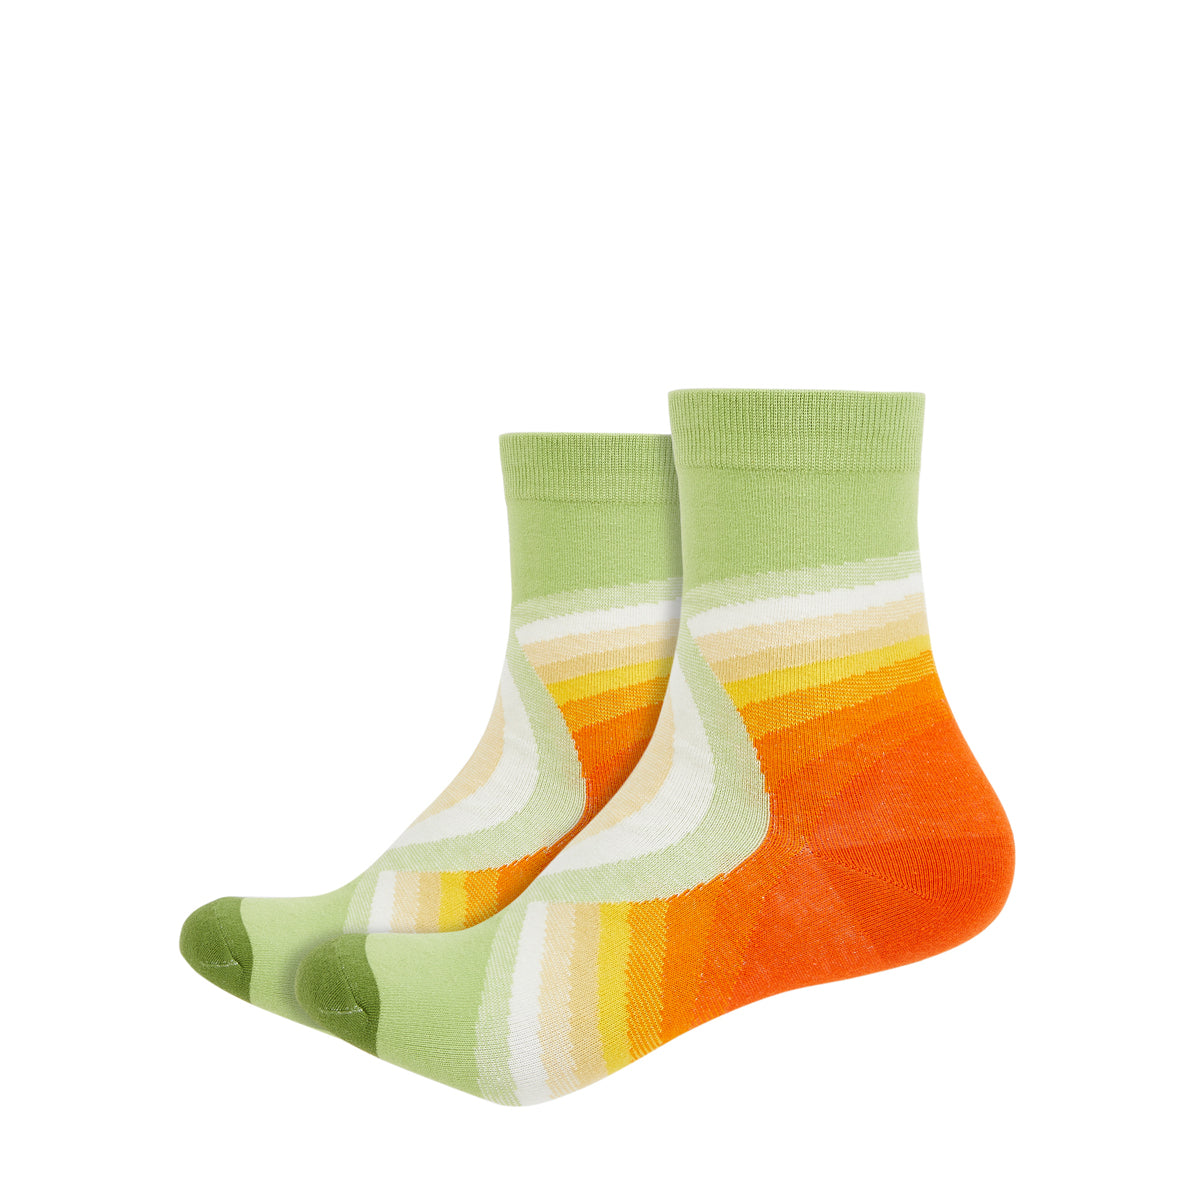 Glow Printed Quarter Length Socks - IDENTITY Apparel Shop